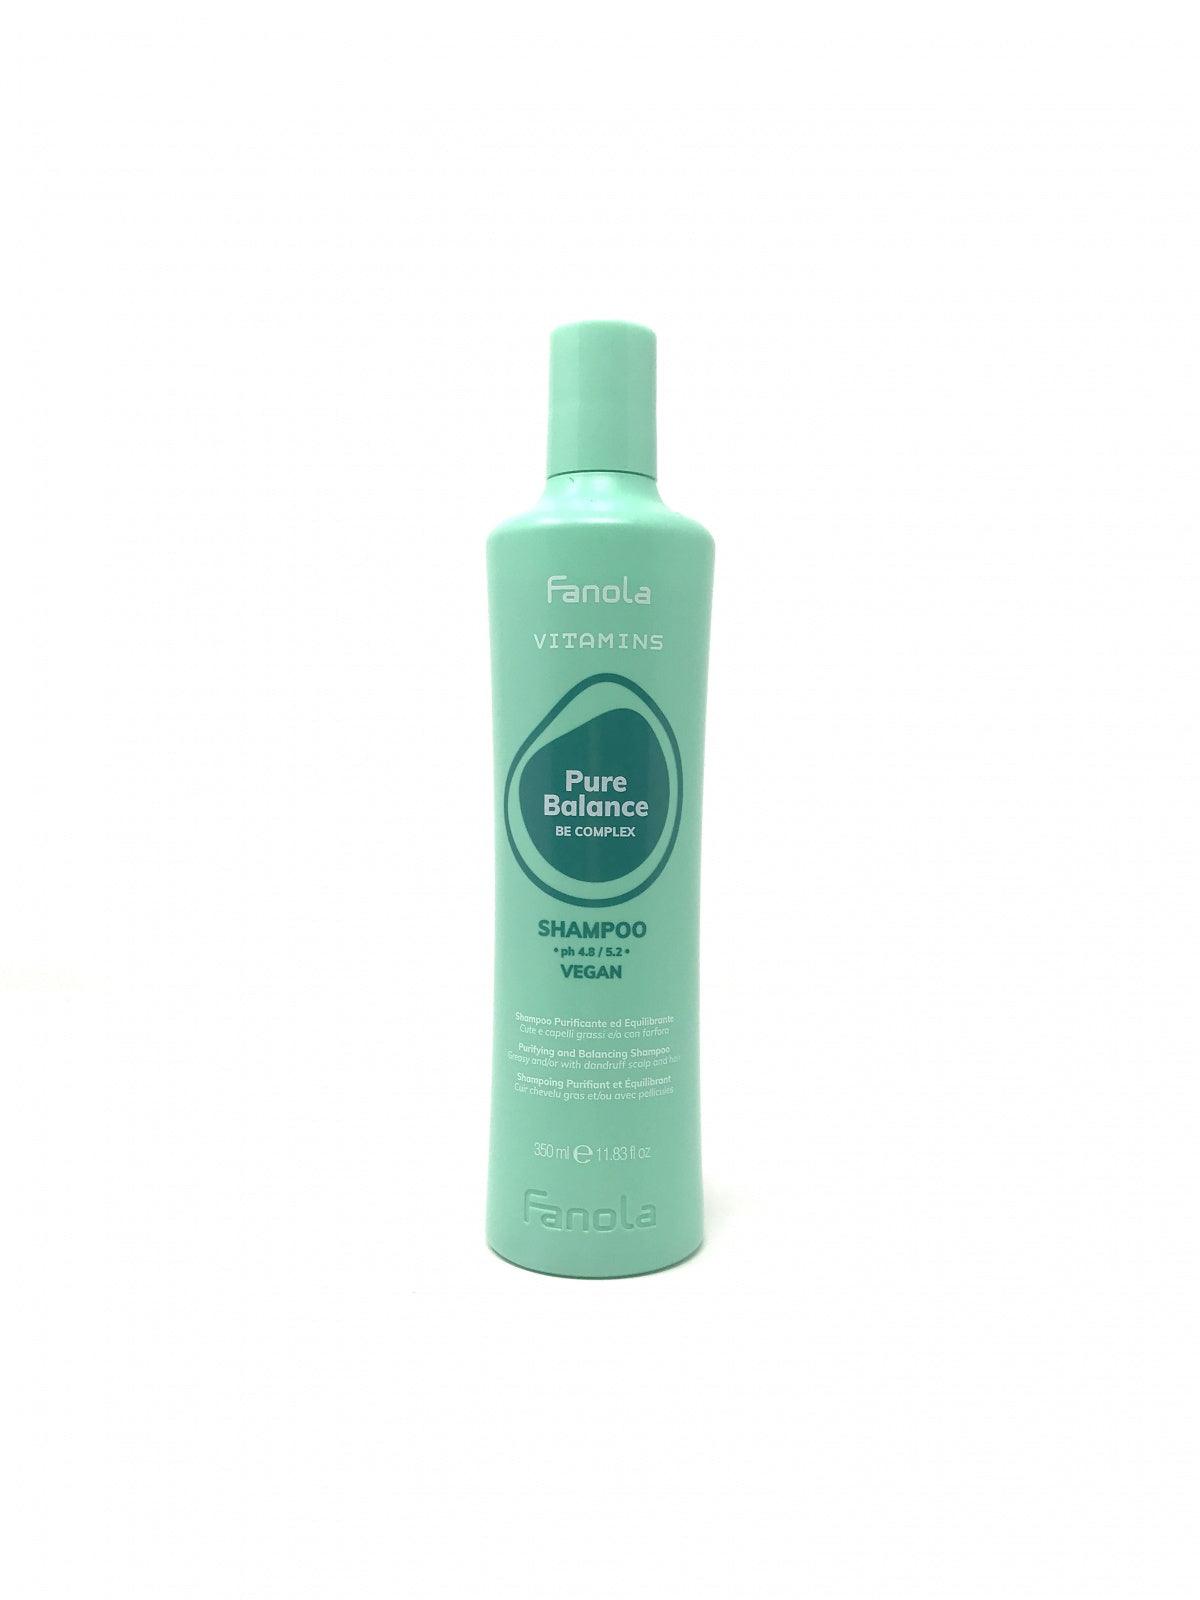 Fanola Pure Balance Anti-Dandruff Shampoo 350 ml